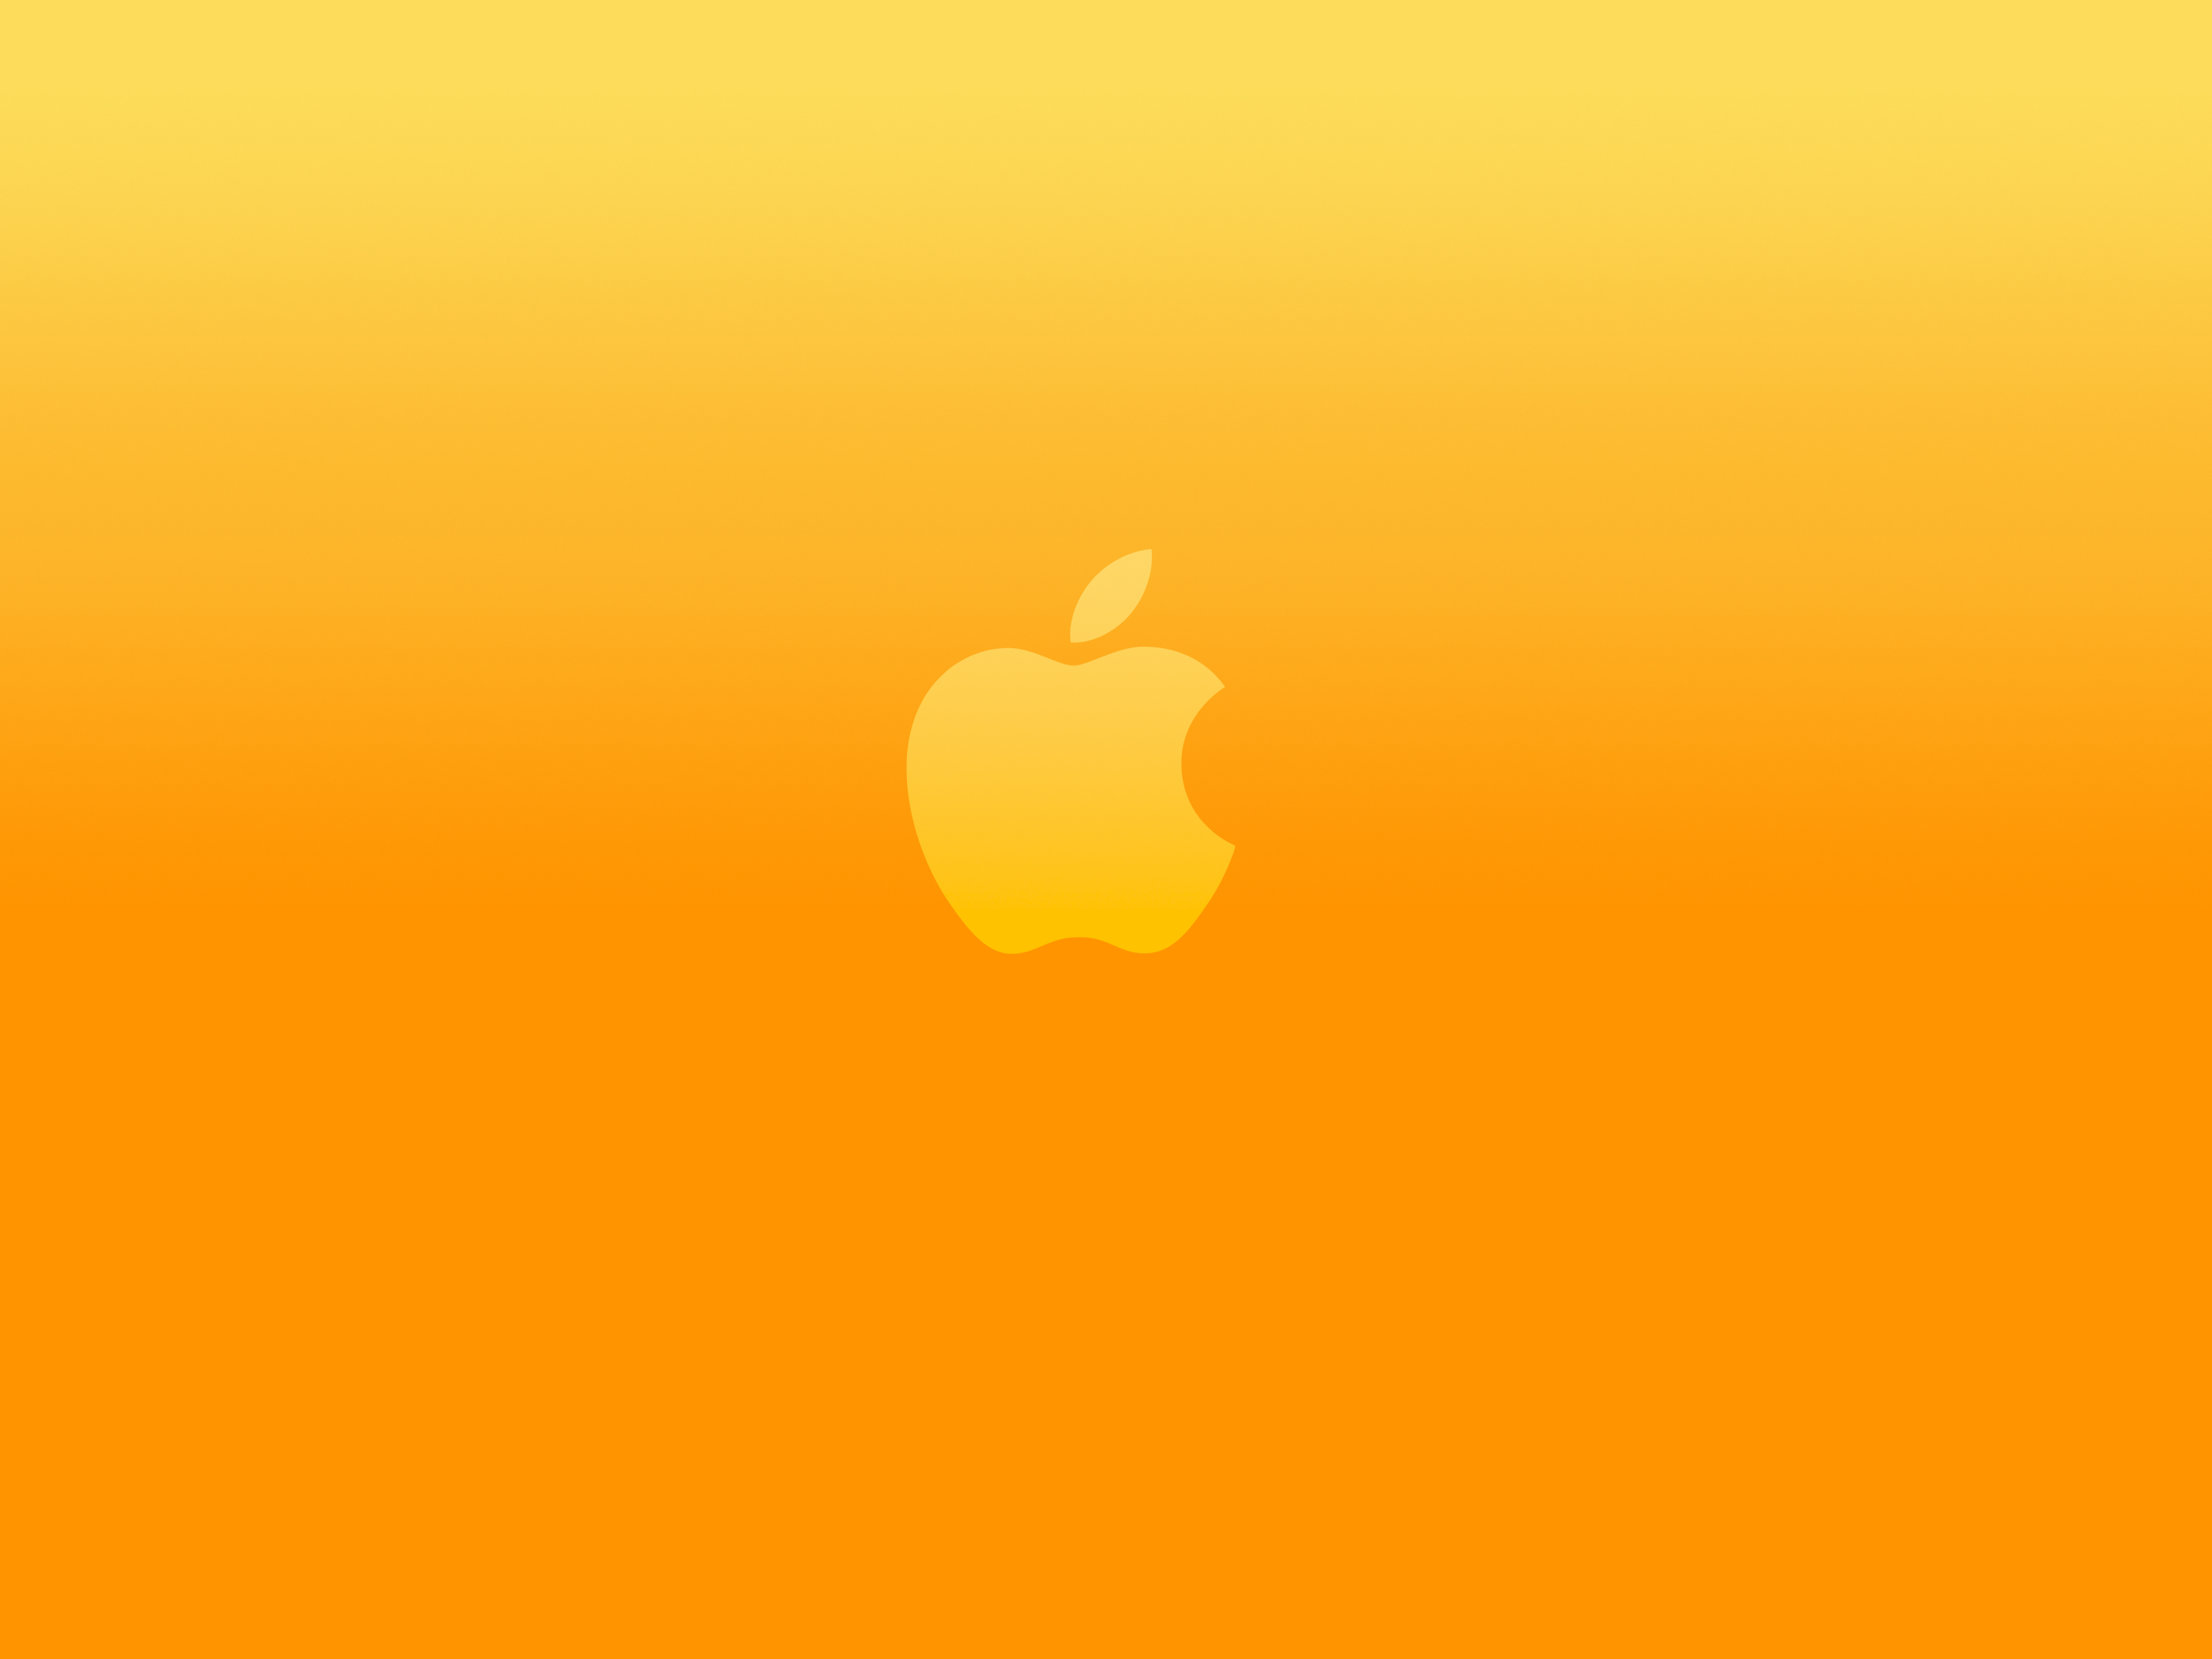 20 Excellent Apple Logo Backgrounds